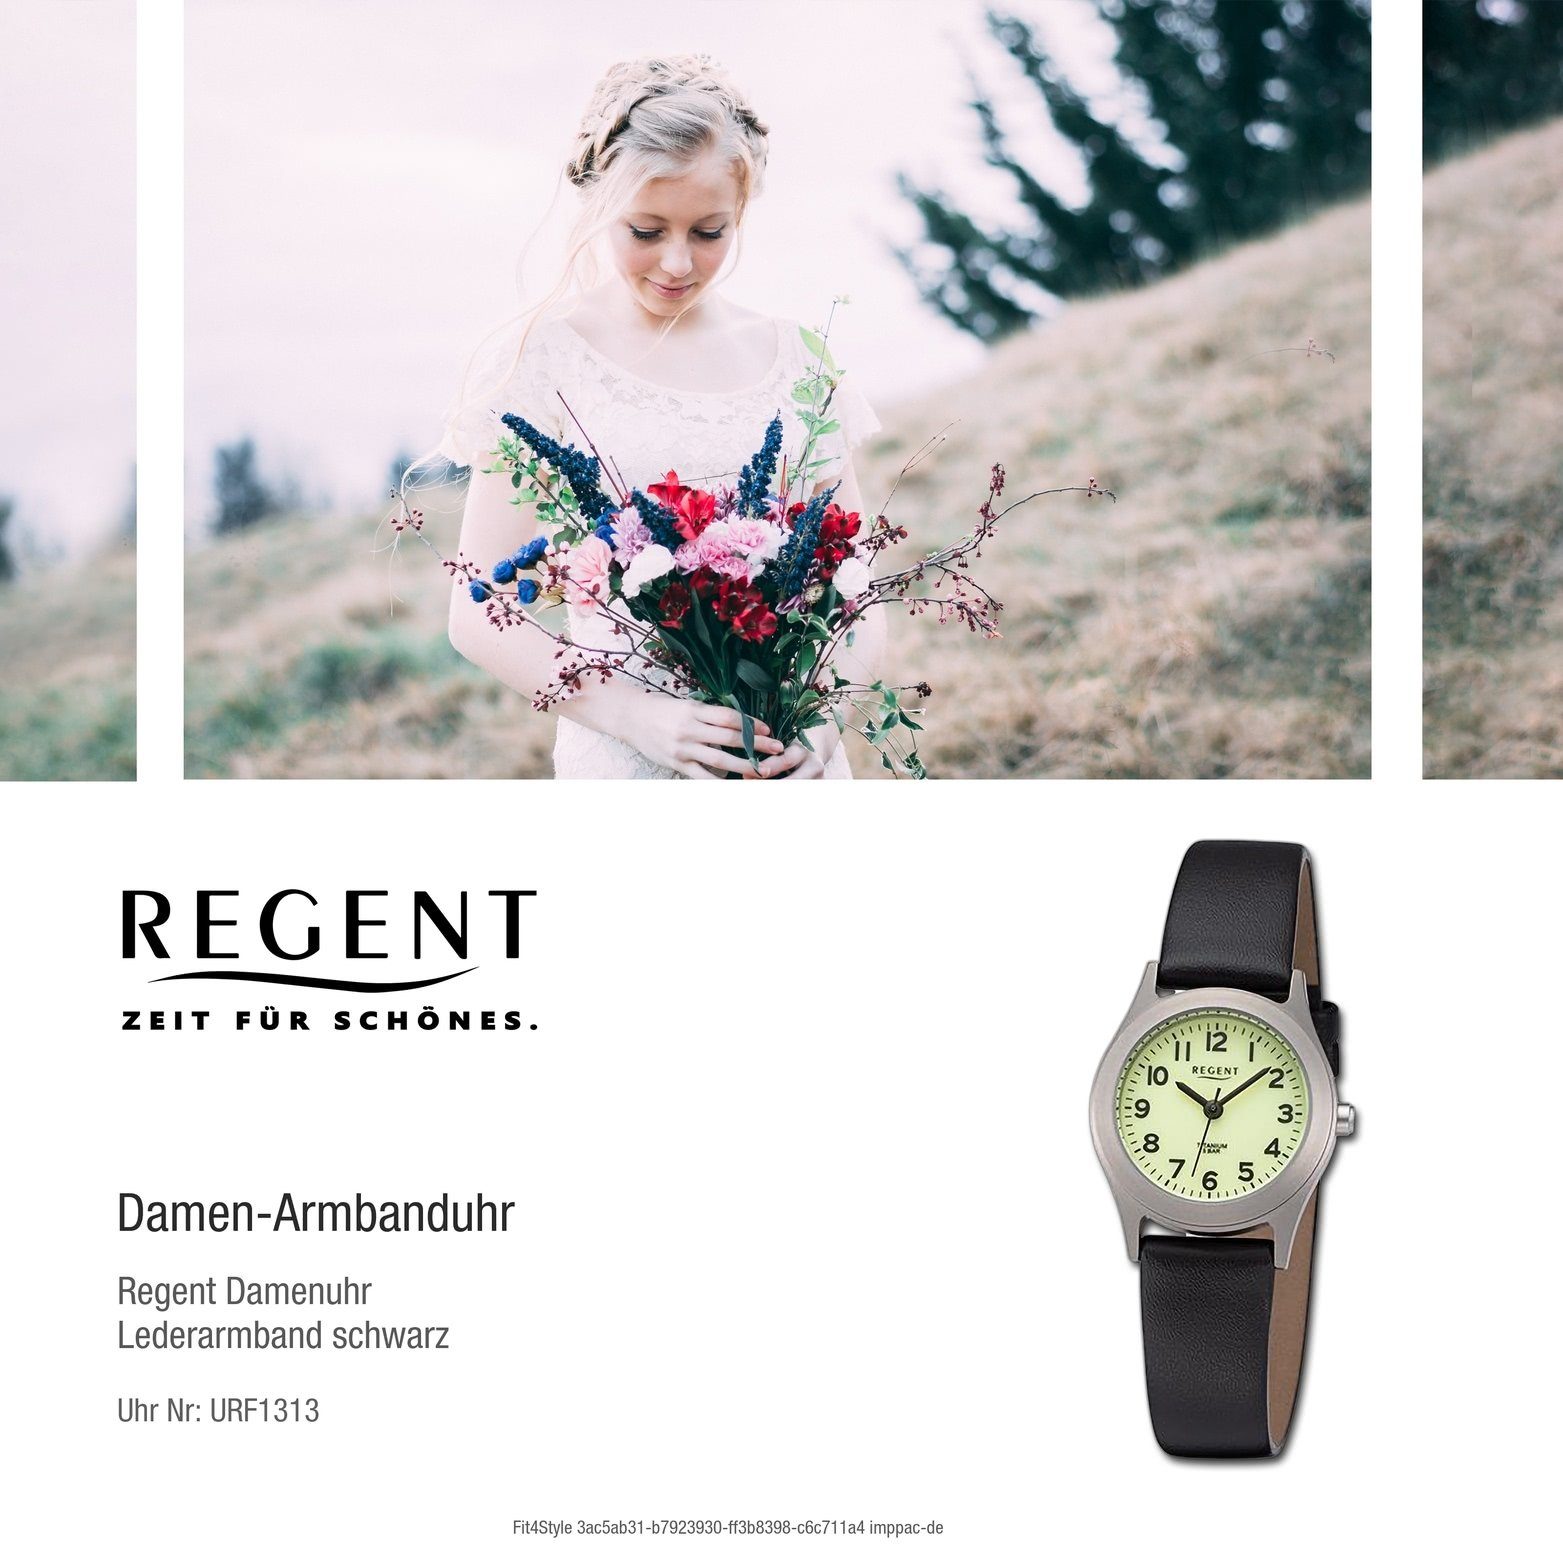 Regent Quarzuhr Regent Damen Armbanduhr Analog, (ca. groß Gehäuse, 26mm) schwarz, rundes Damenuhr extra Lederarmband